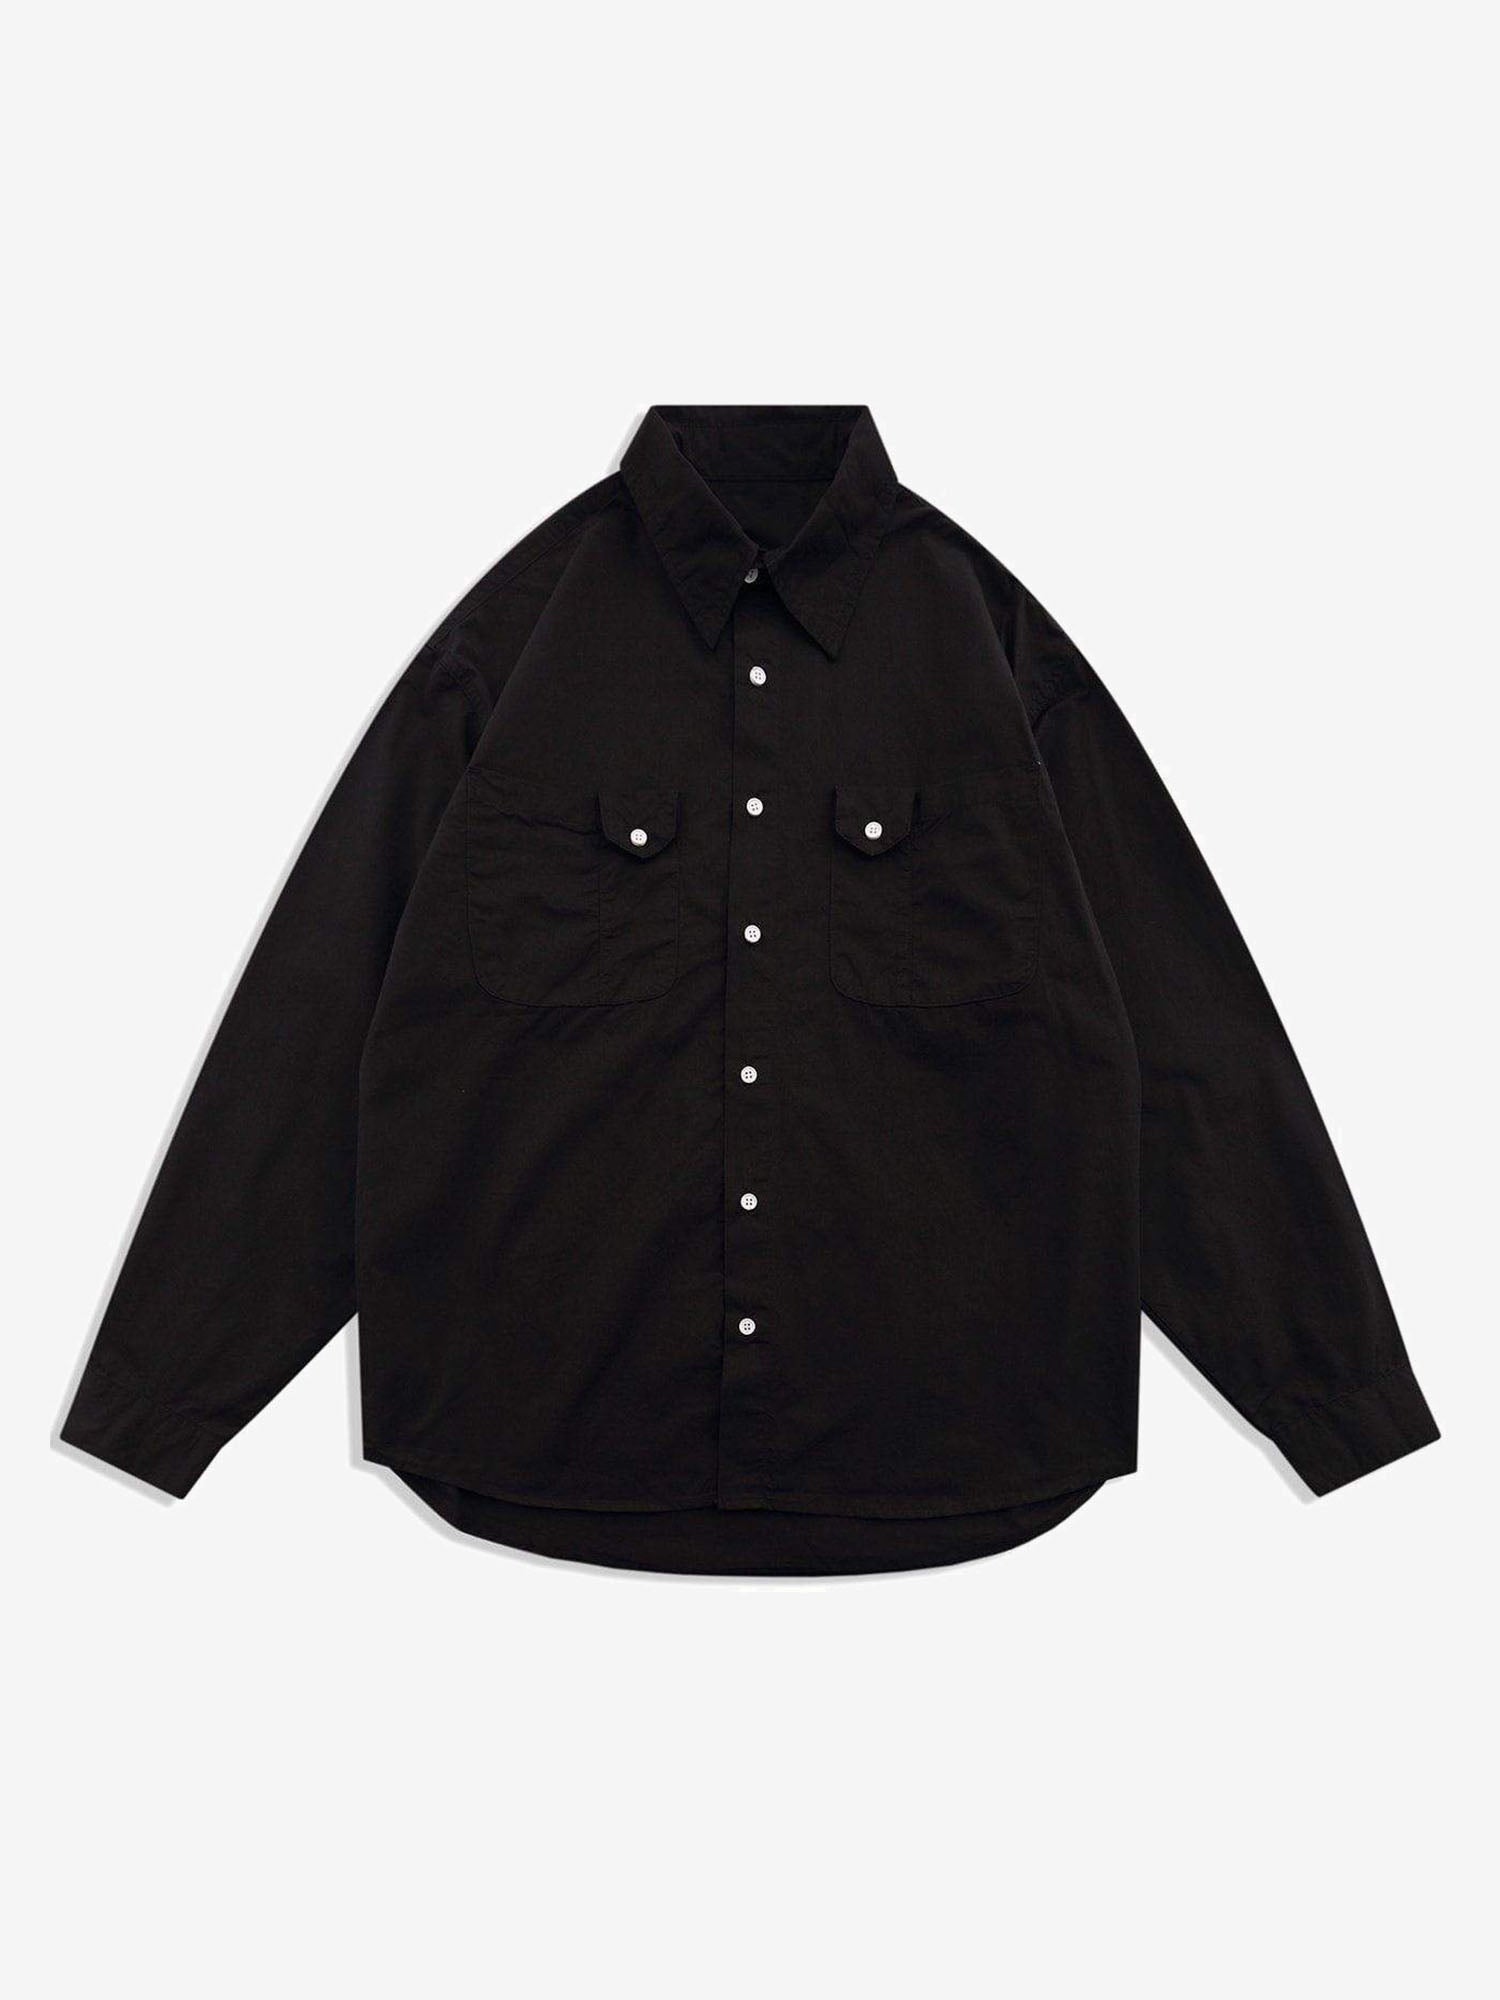 JUSTNOTAG Pocket Plain Long Regular Sleeve Shirt